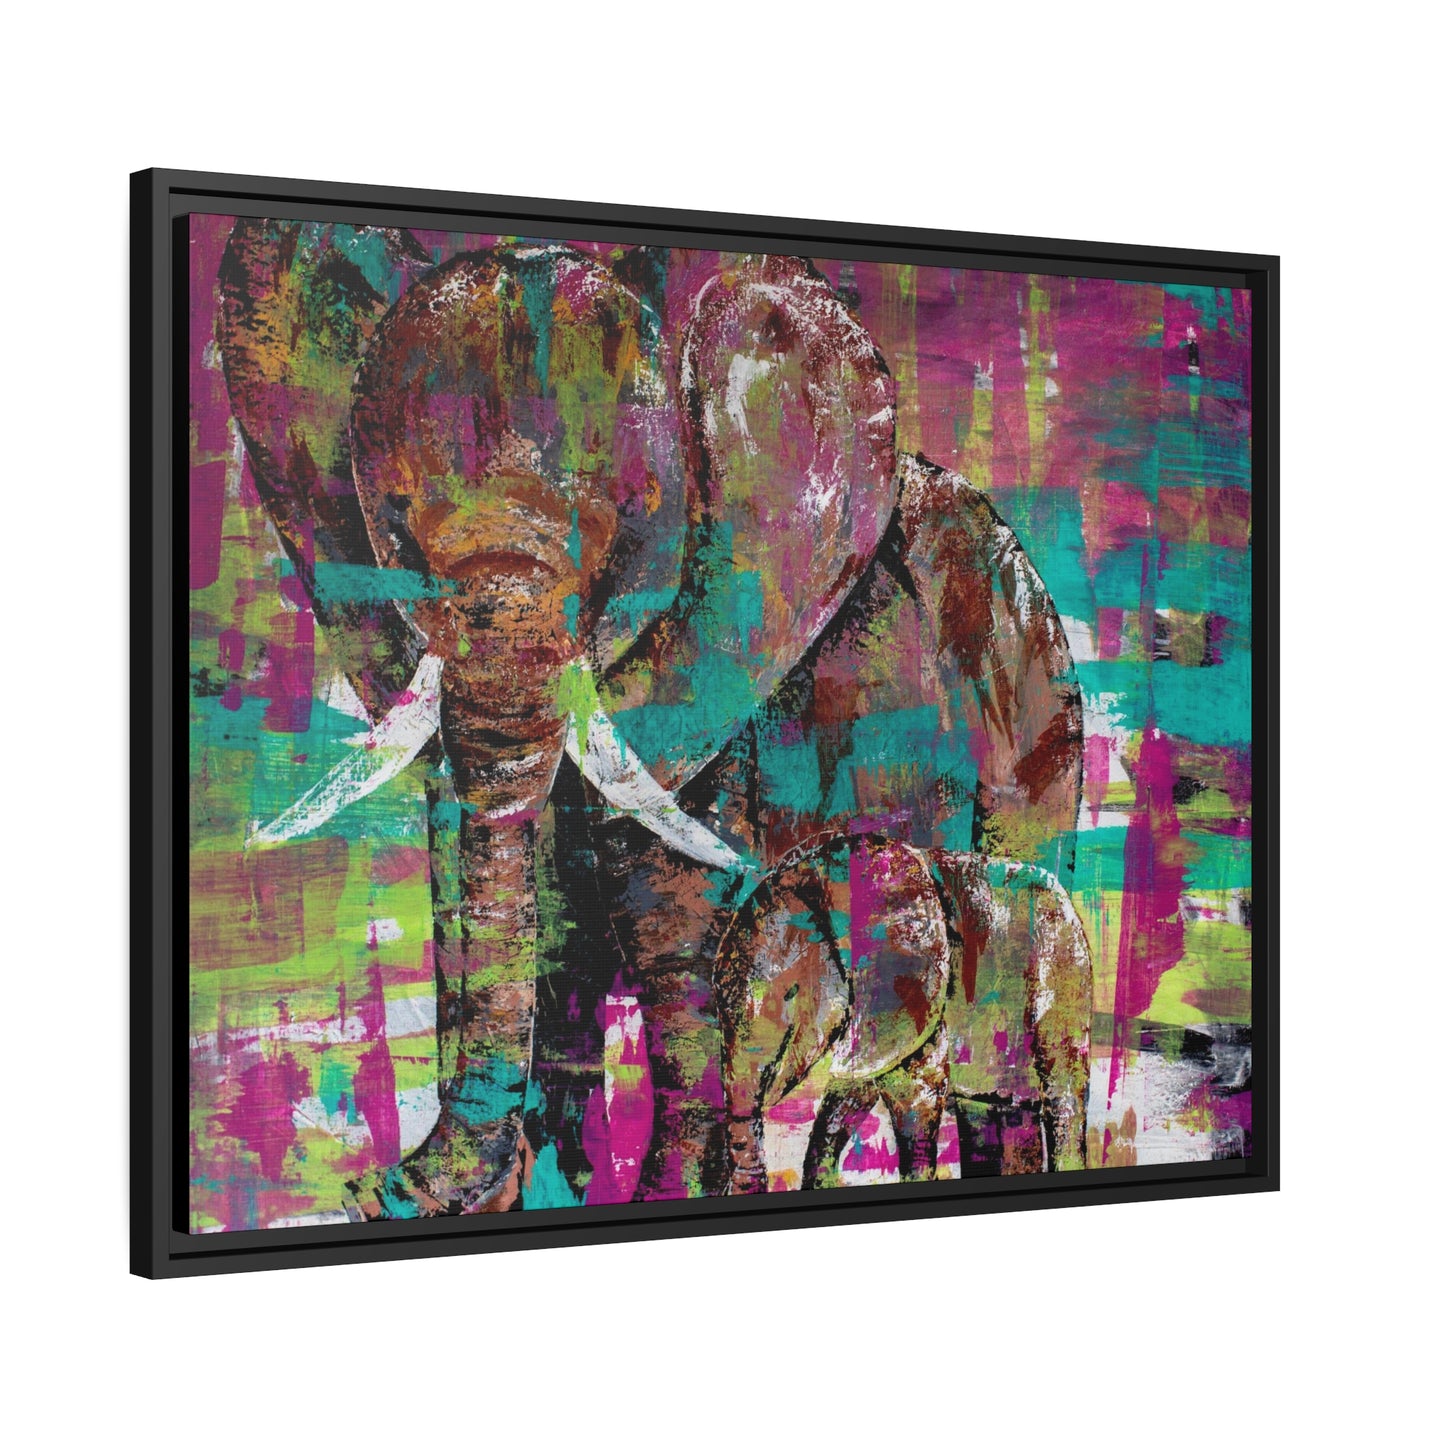 Framed wall Art - framed Art - Wall Canvas - Wall Art - Pure Love, Elephant art painting